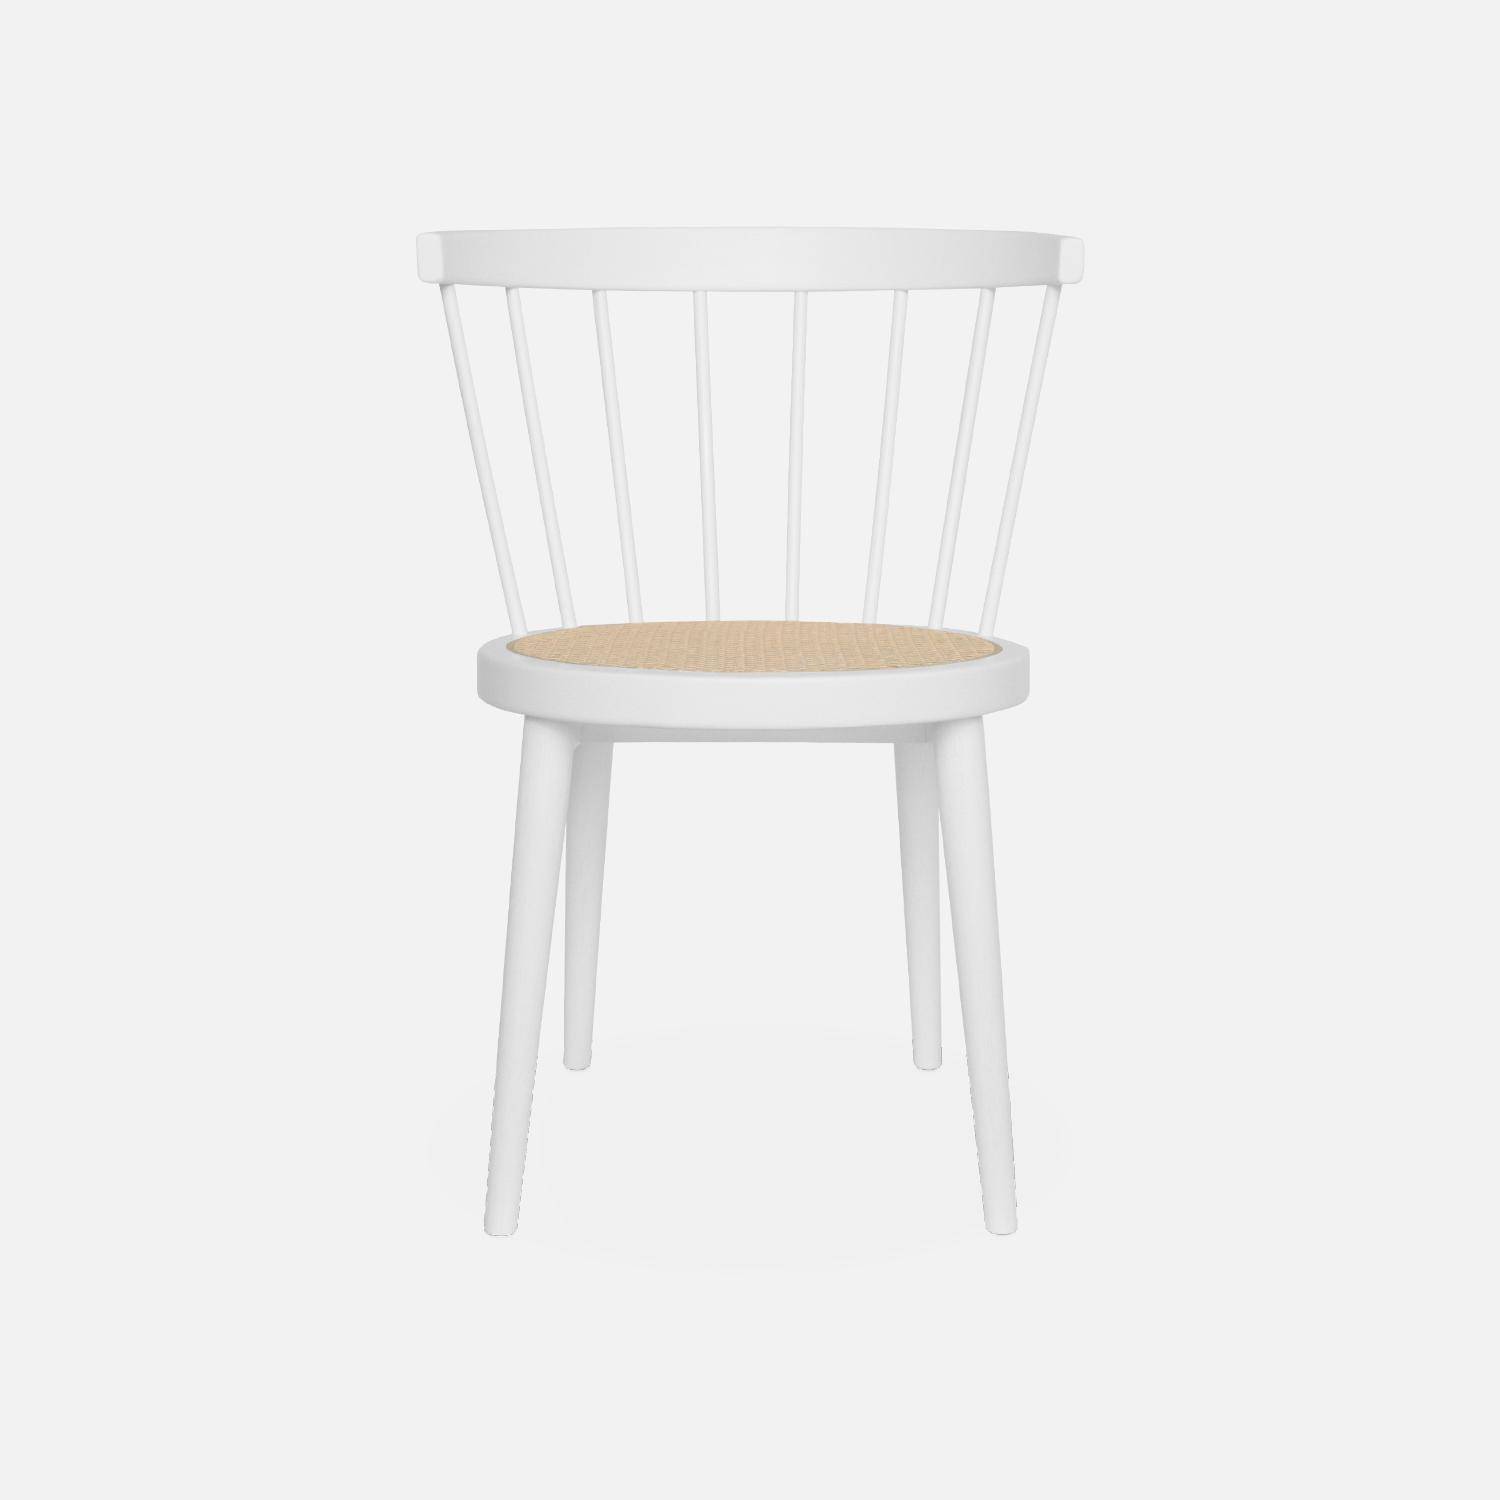 Juego de 2 sillas de madera blanca y caña, Nora, A 54 x P 54 x Alt 76,5cm. Photo5